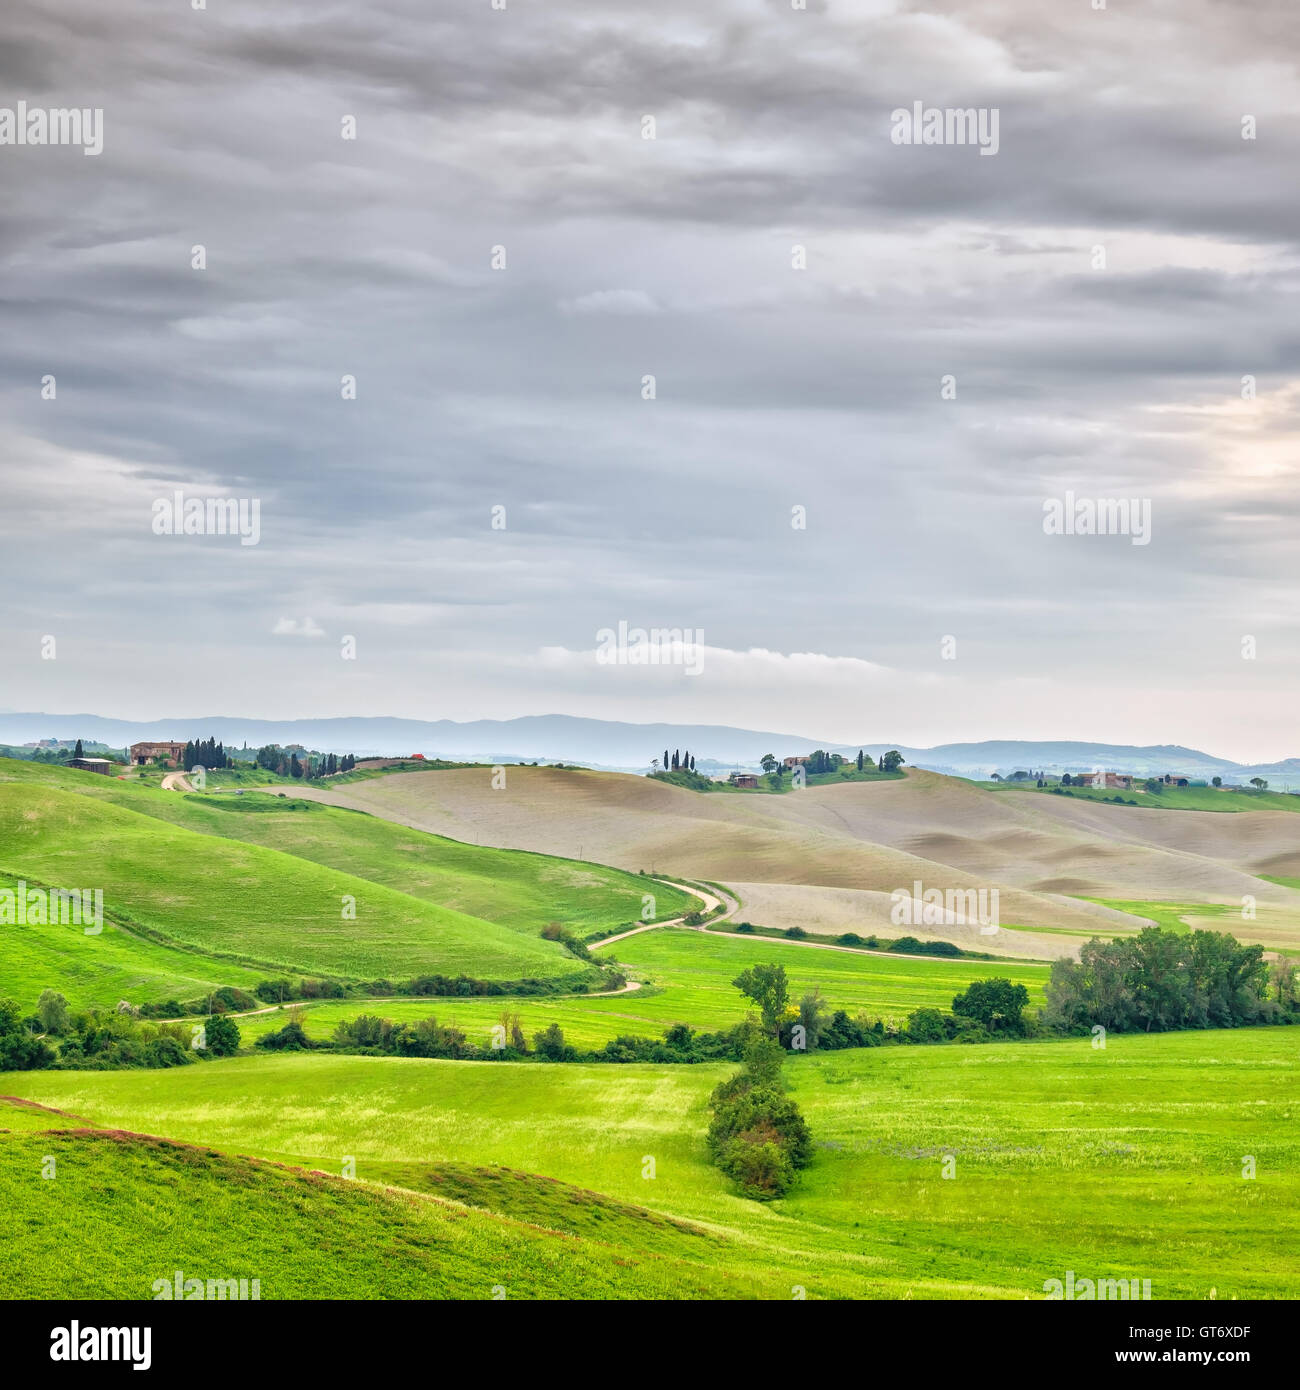 Toskana, Landschaft im ländlichen Raum. Landschaft-Ackerland, Bäume, grüne Wiese und Cloud. Orcia-Tals, Toskana, Italien, Europa. Stockfoto